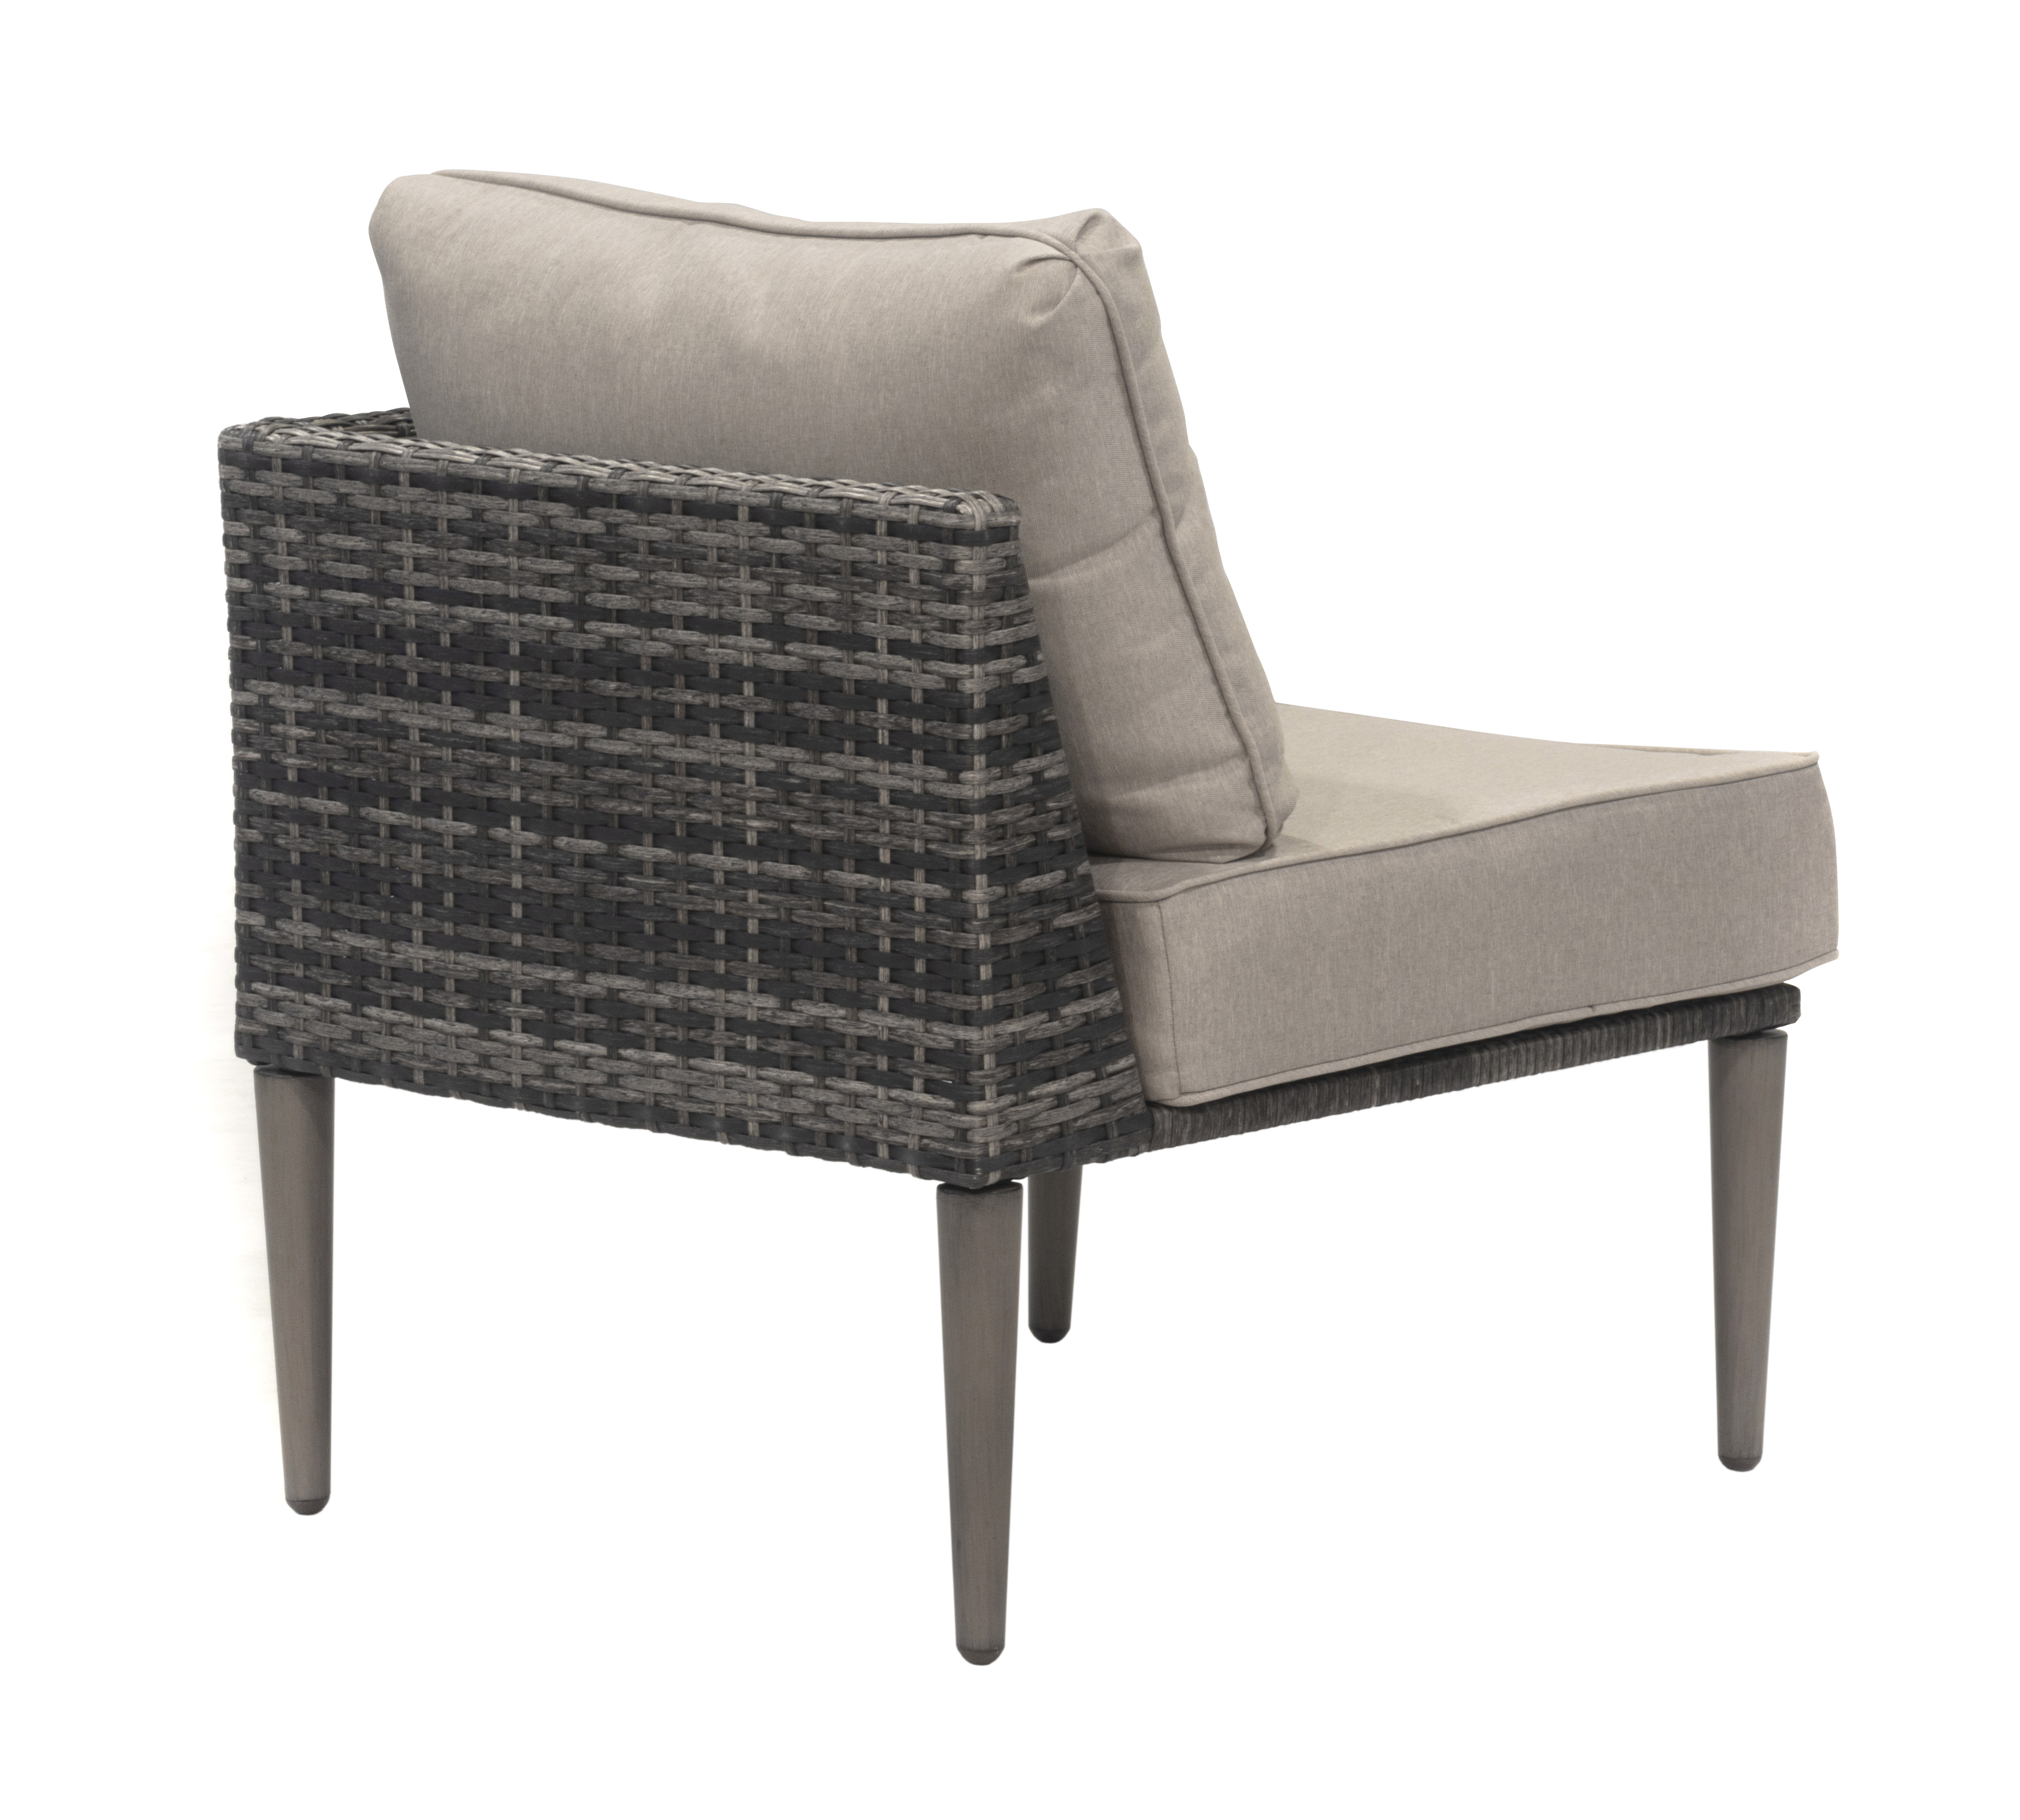 Donglin Outdoor Patio Furniture Sutton Creek 7-Piece Steel Sectional Sofa PE Wicker Rattan Set,Gray - image 4 of 16